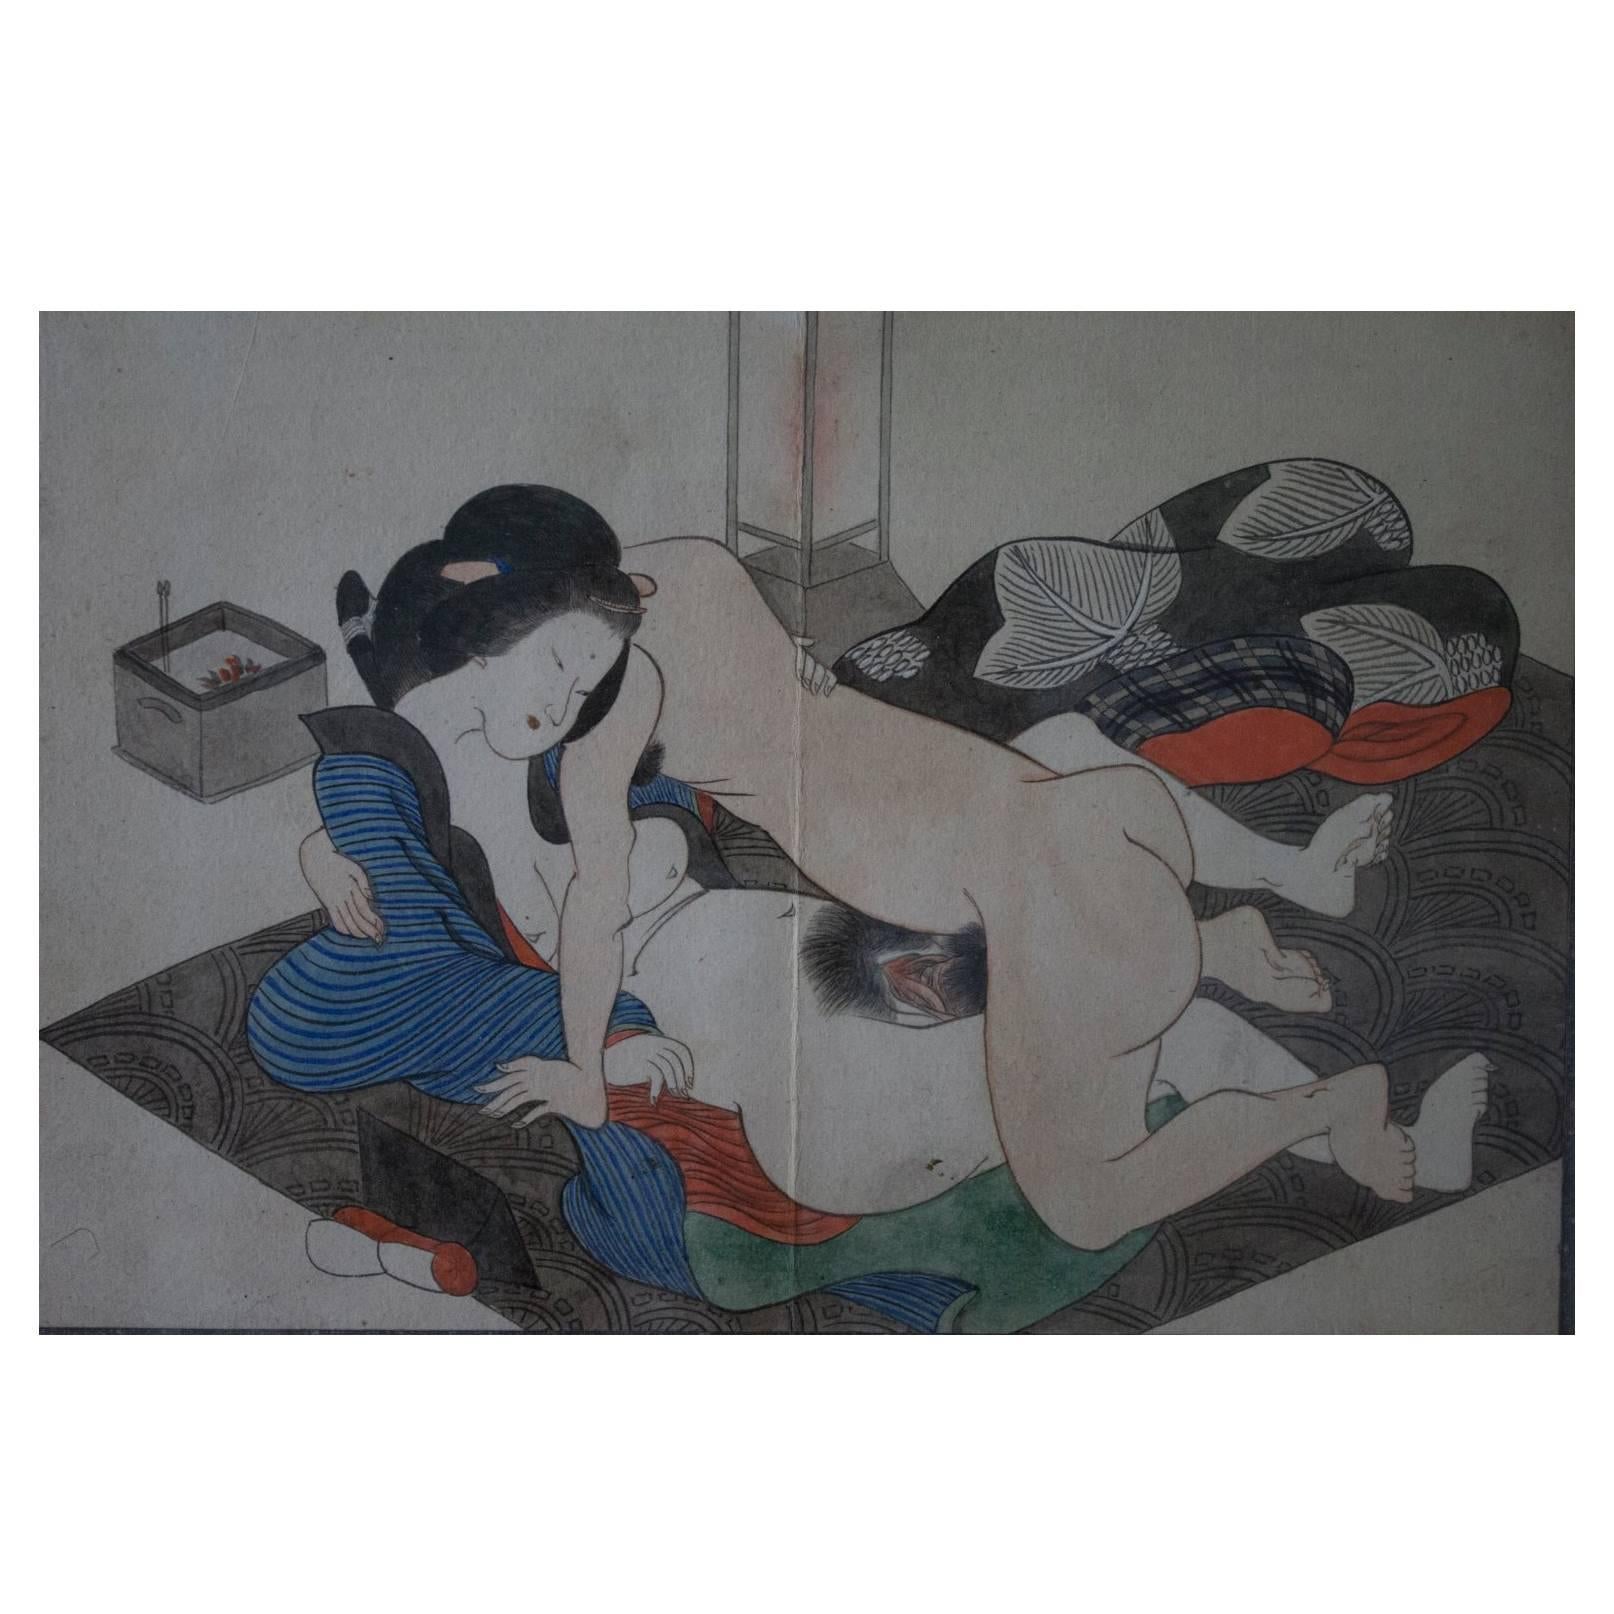 Oriiginal and Framed Shunga Prints by Kitagawa Utamaro